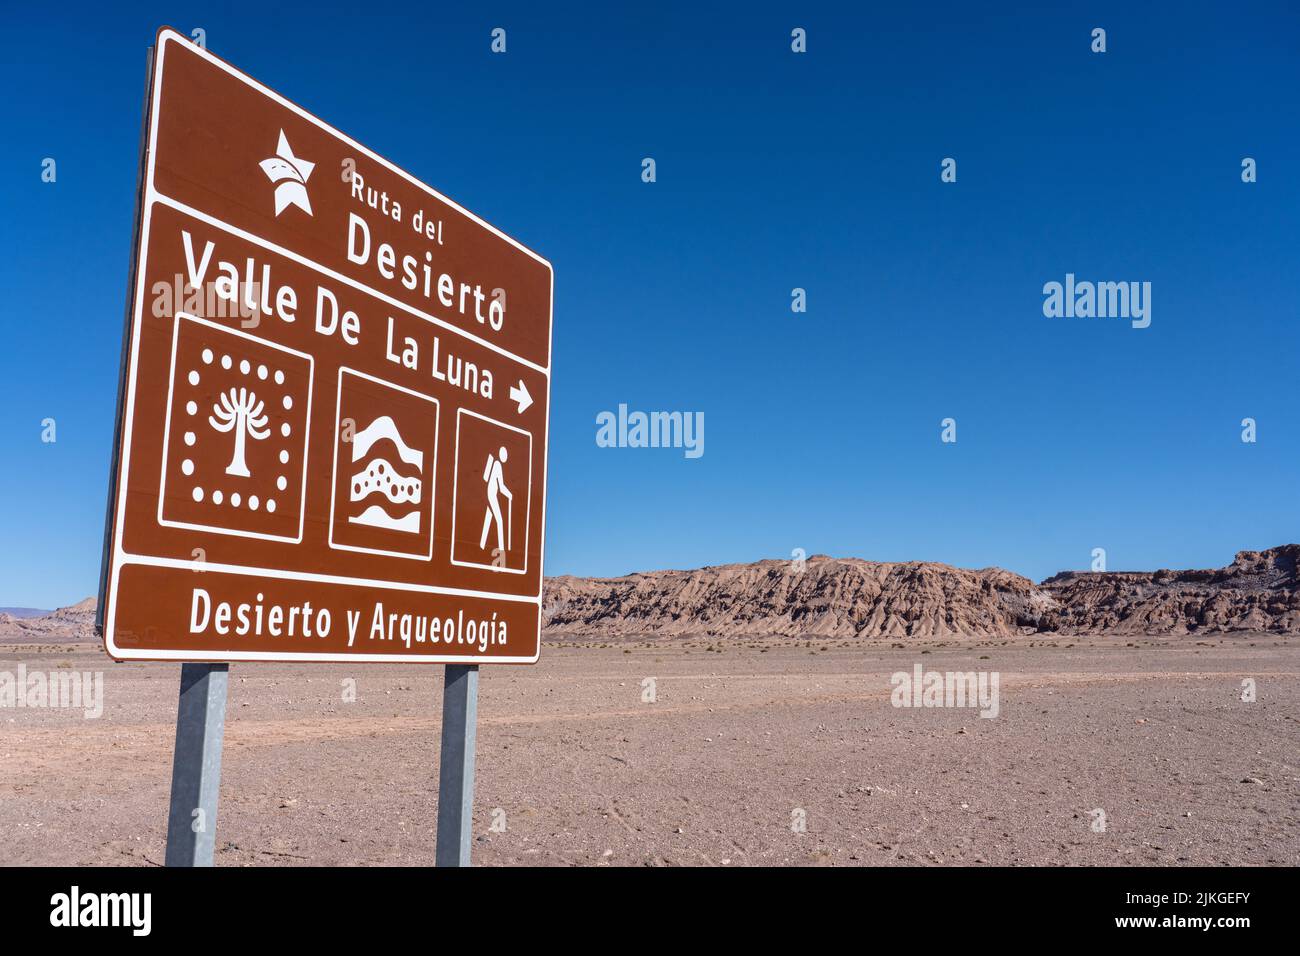 Road sign for the Ruta del Desierto to the Valley of the Moon or Valle de Luna near San Pedro de Atacama, Chile. Stock Photo